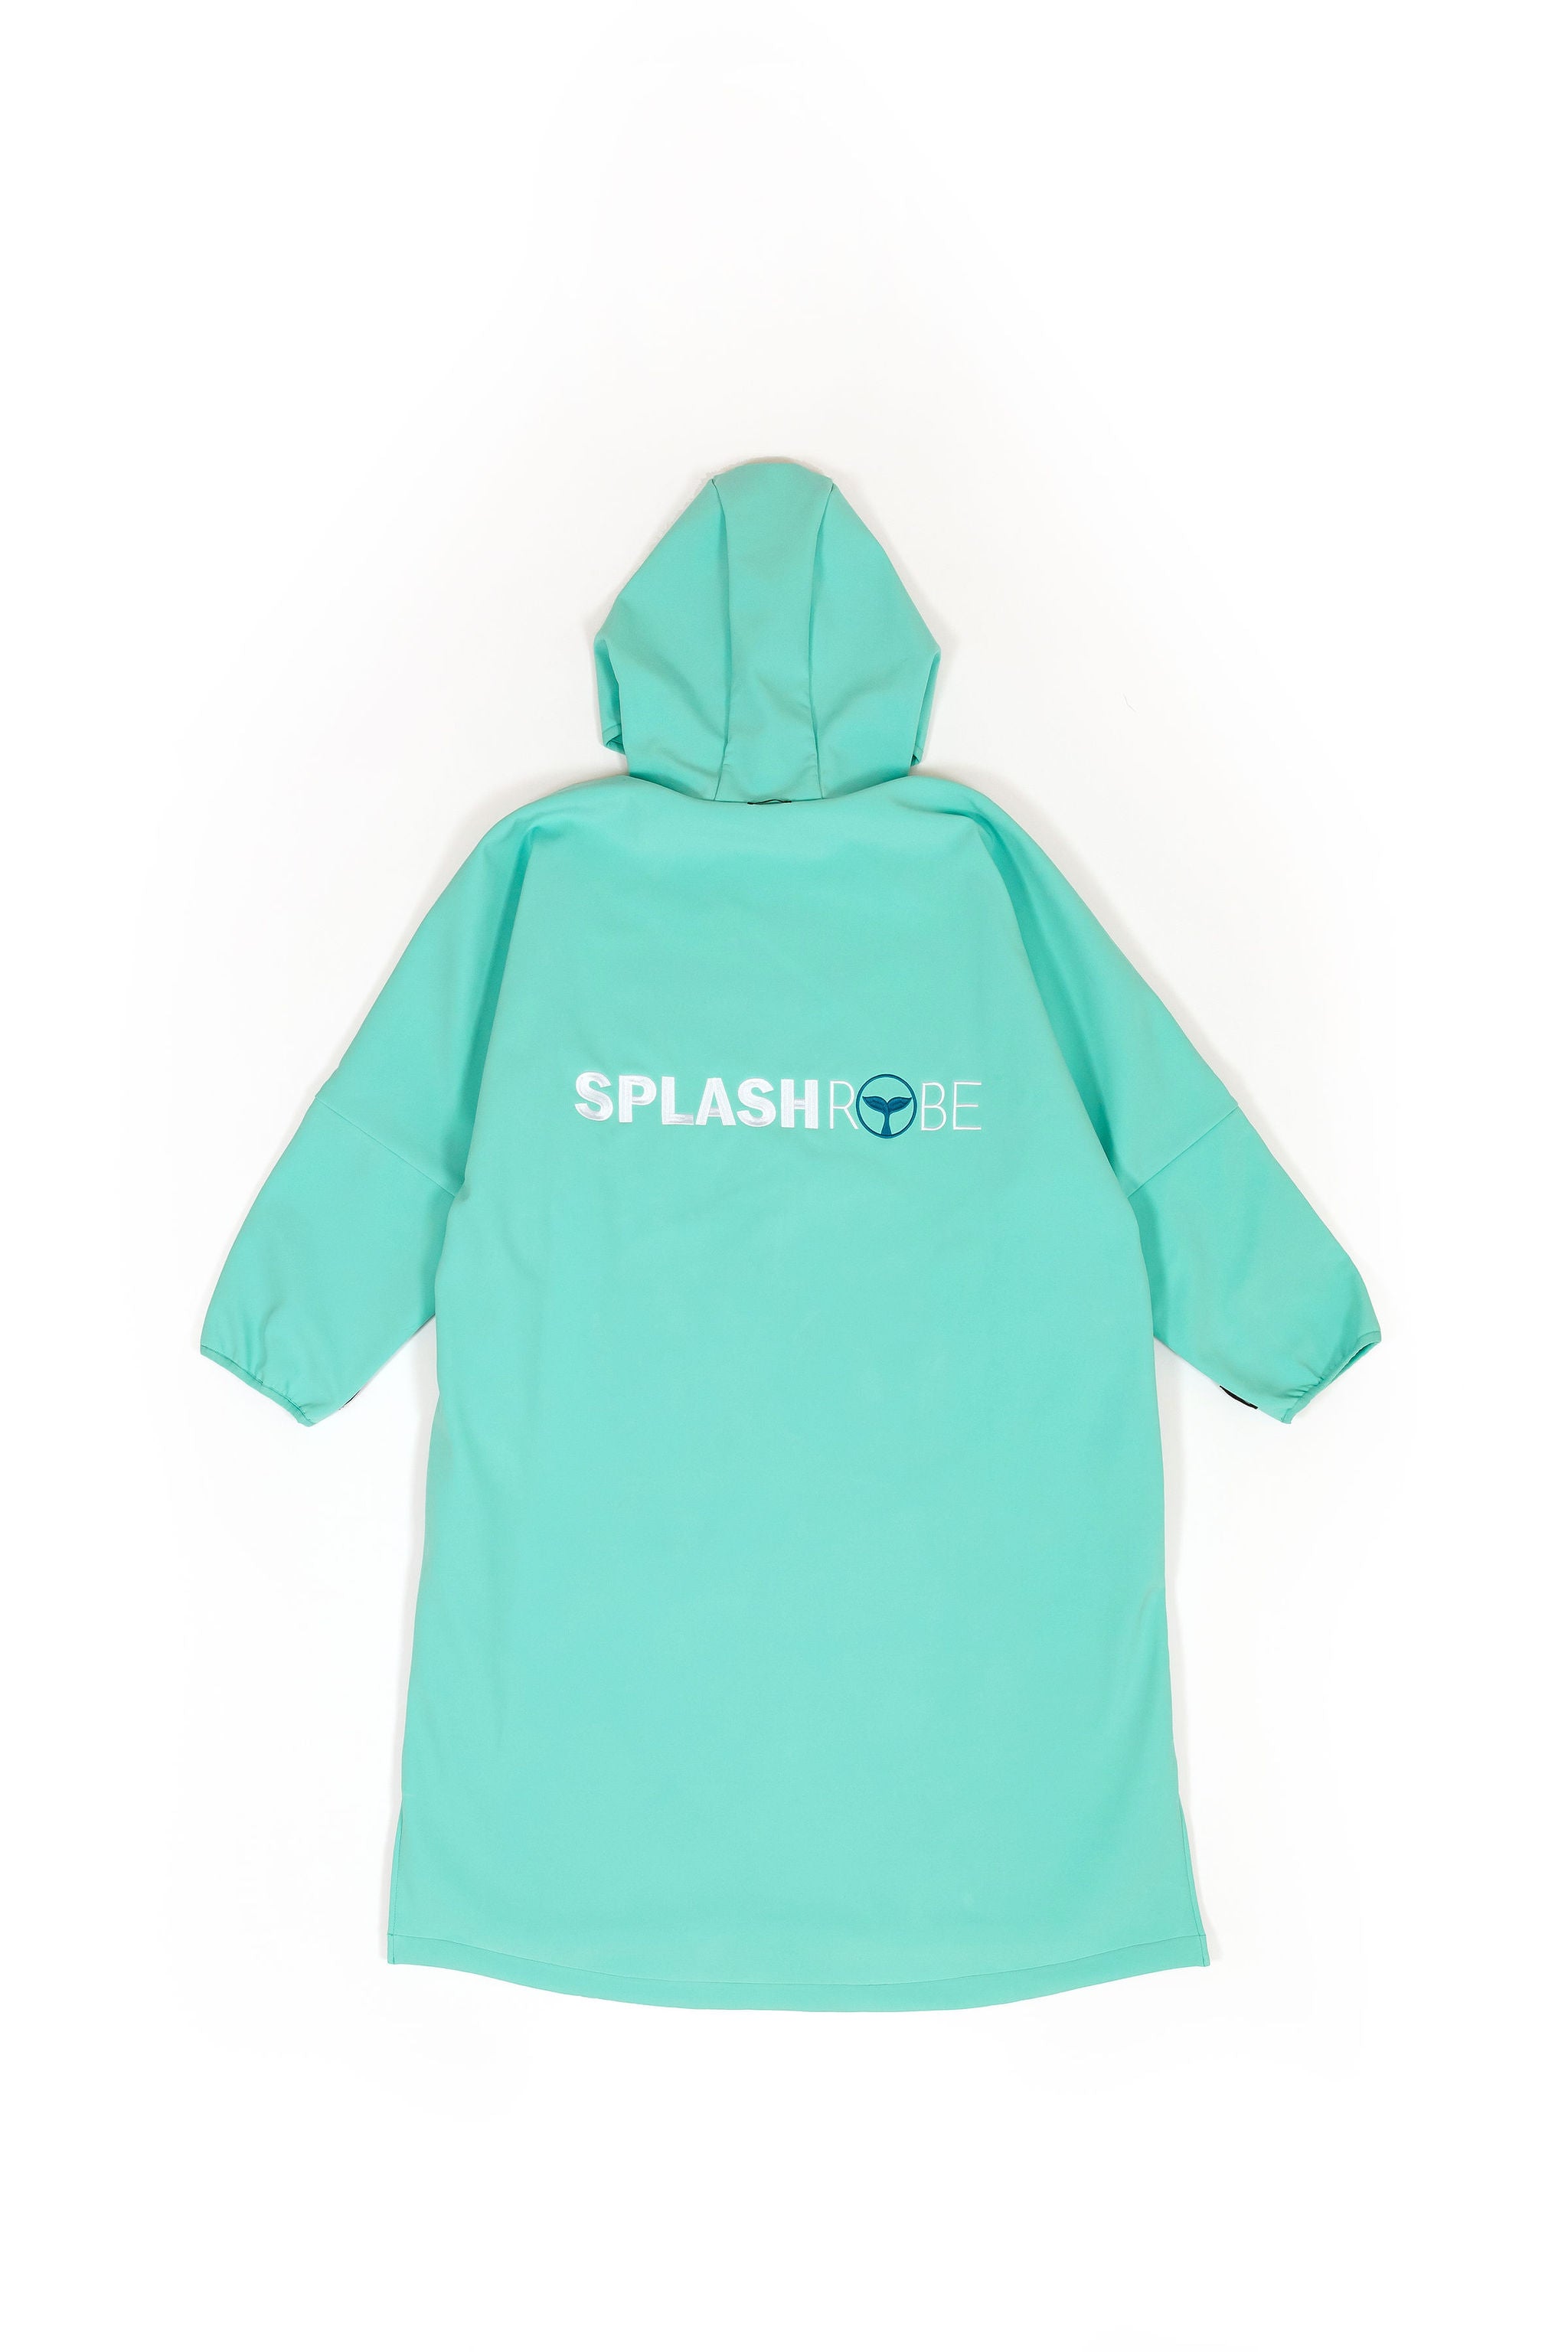 SplashRobe 3-in-1 Changing Robe in Aqua & Blue